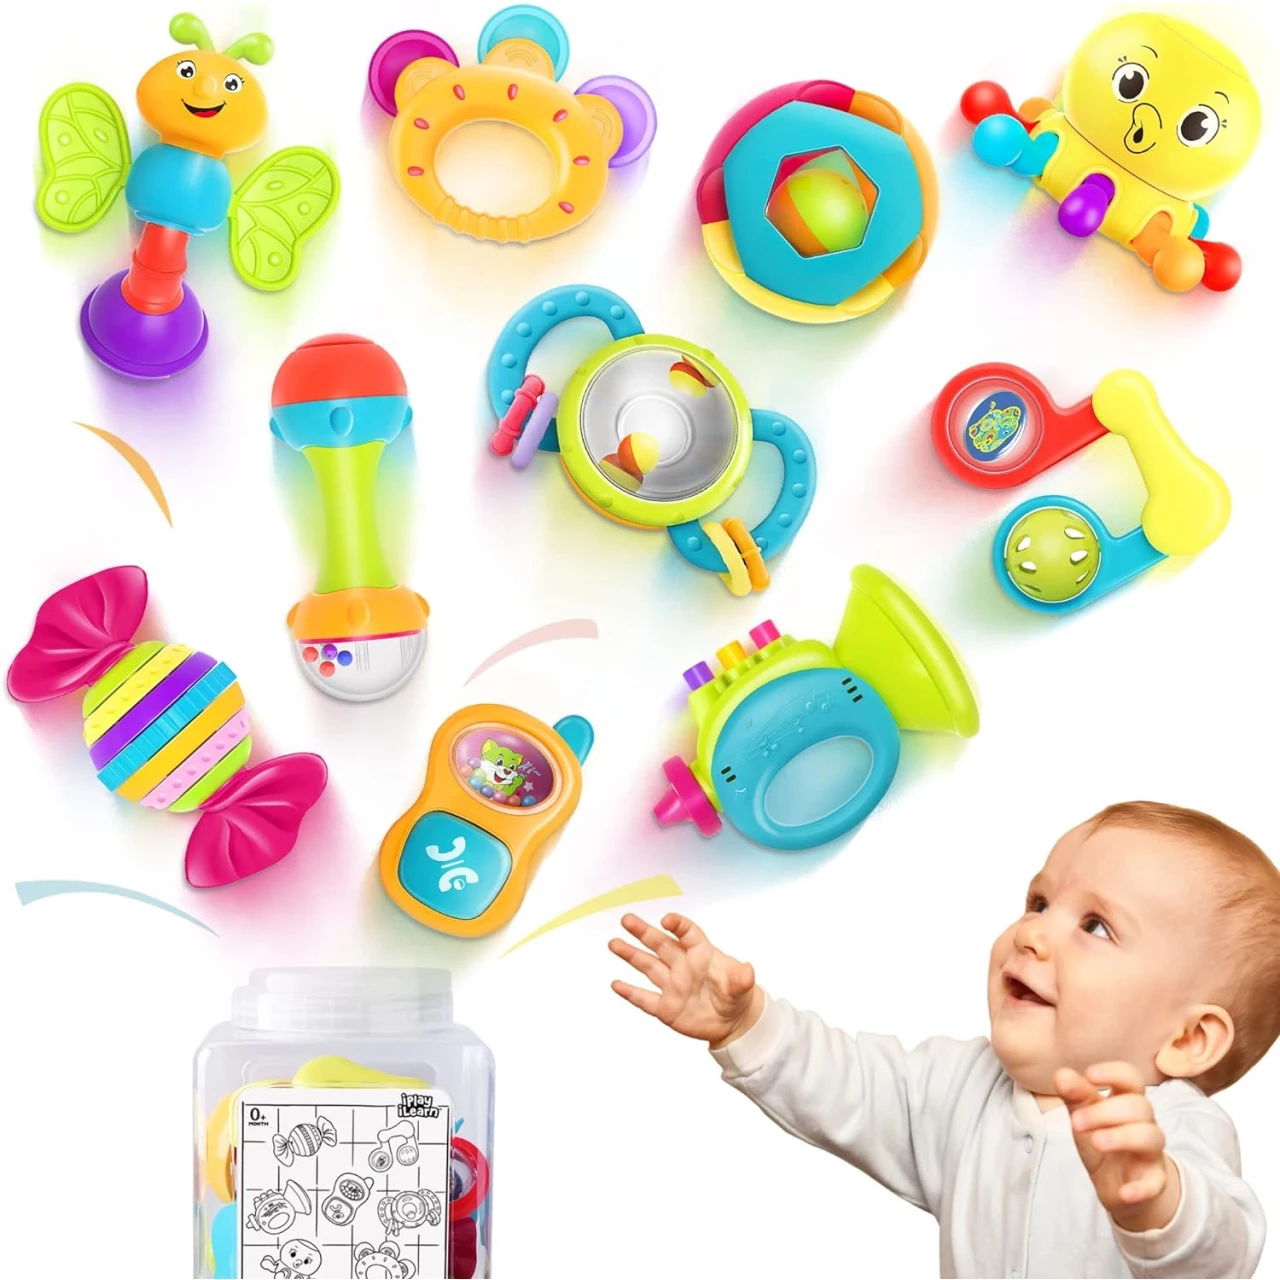 iPlay, iLearn 10pcs Baby Rattles Toys Set, Infant Grab N Shake Rattle, Sensory Teether, Development Learning Music Toy